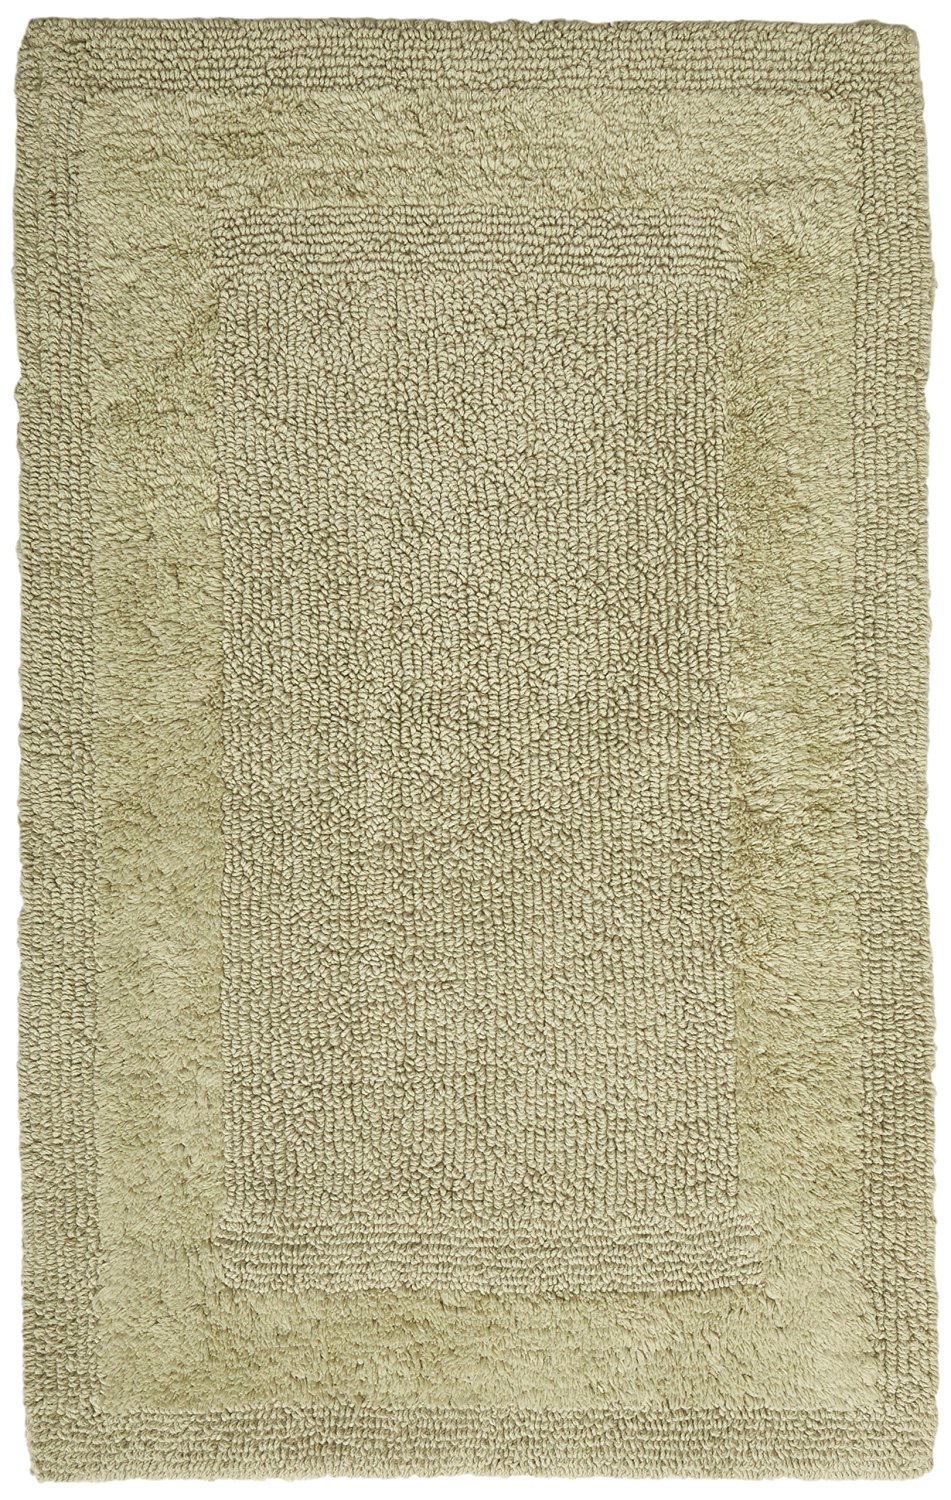 Medium-Sized, Reversible Cotton Bath Mat in Sage